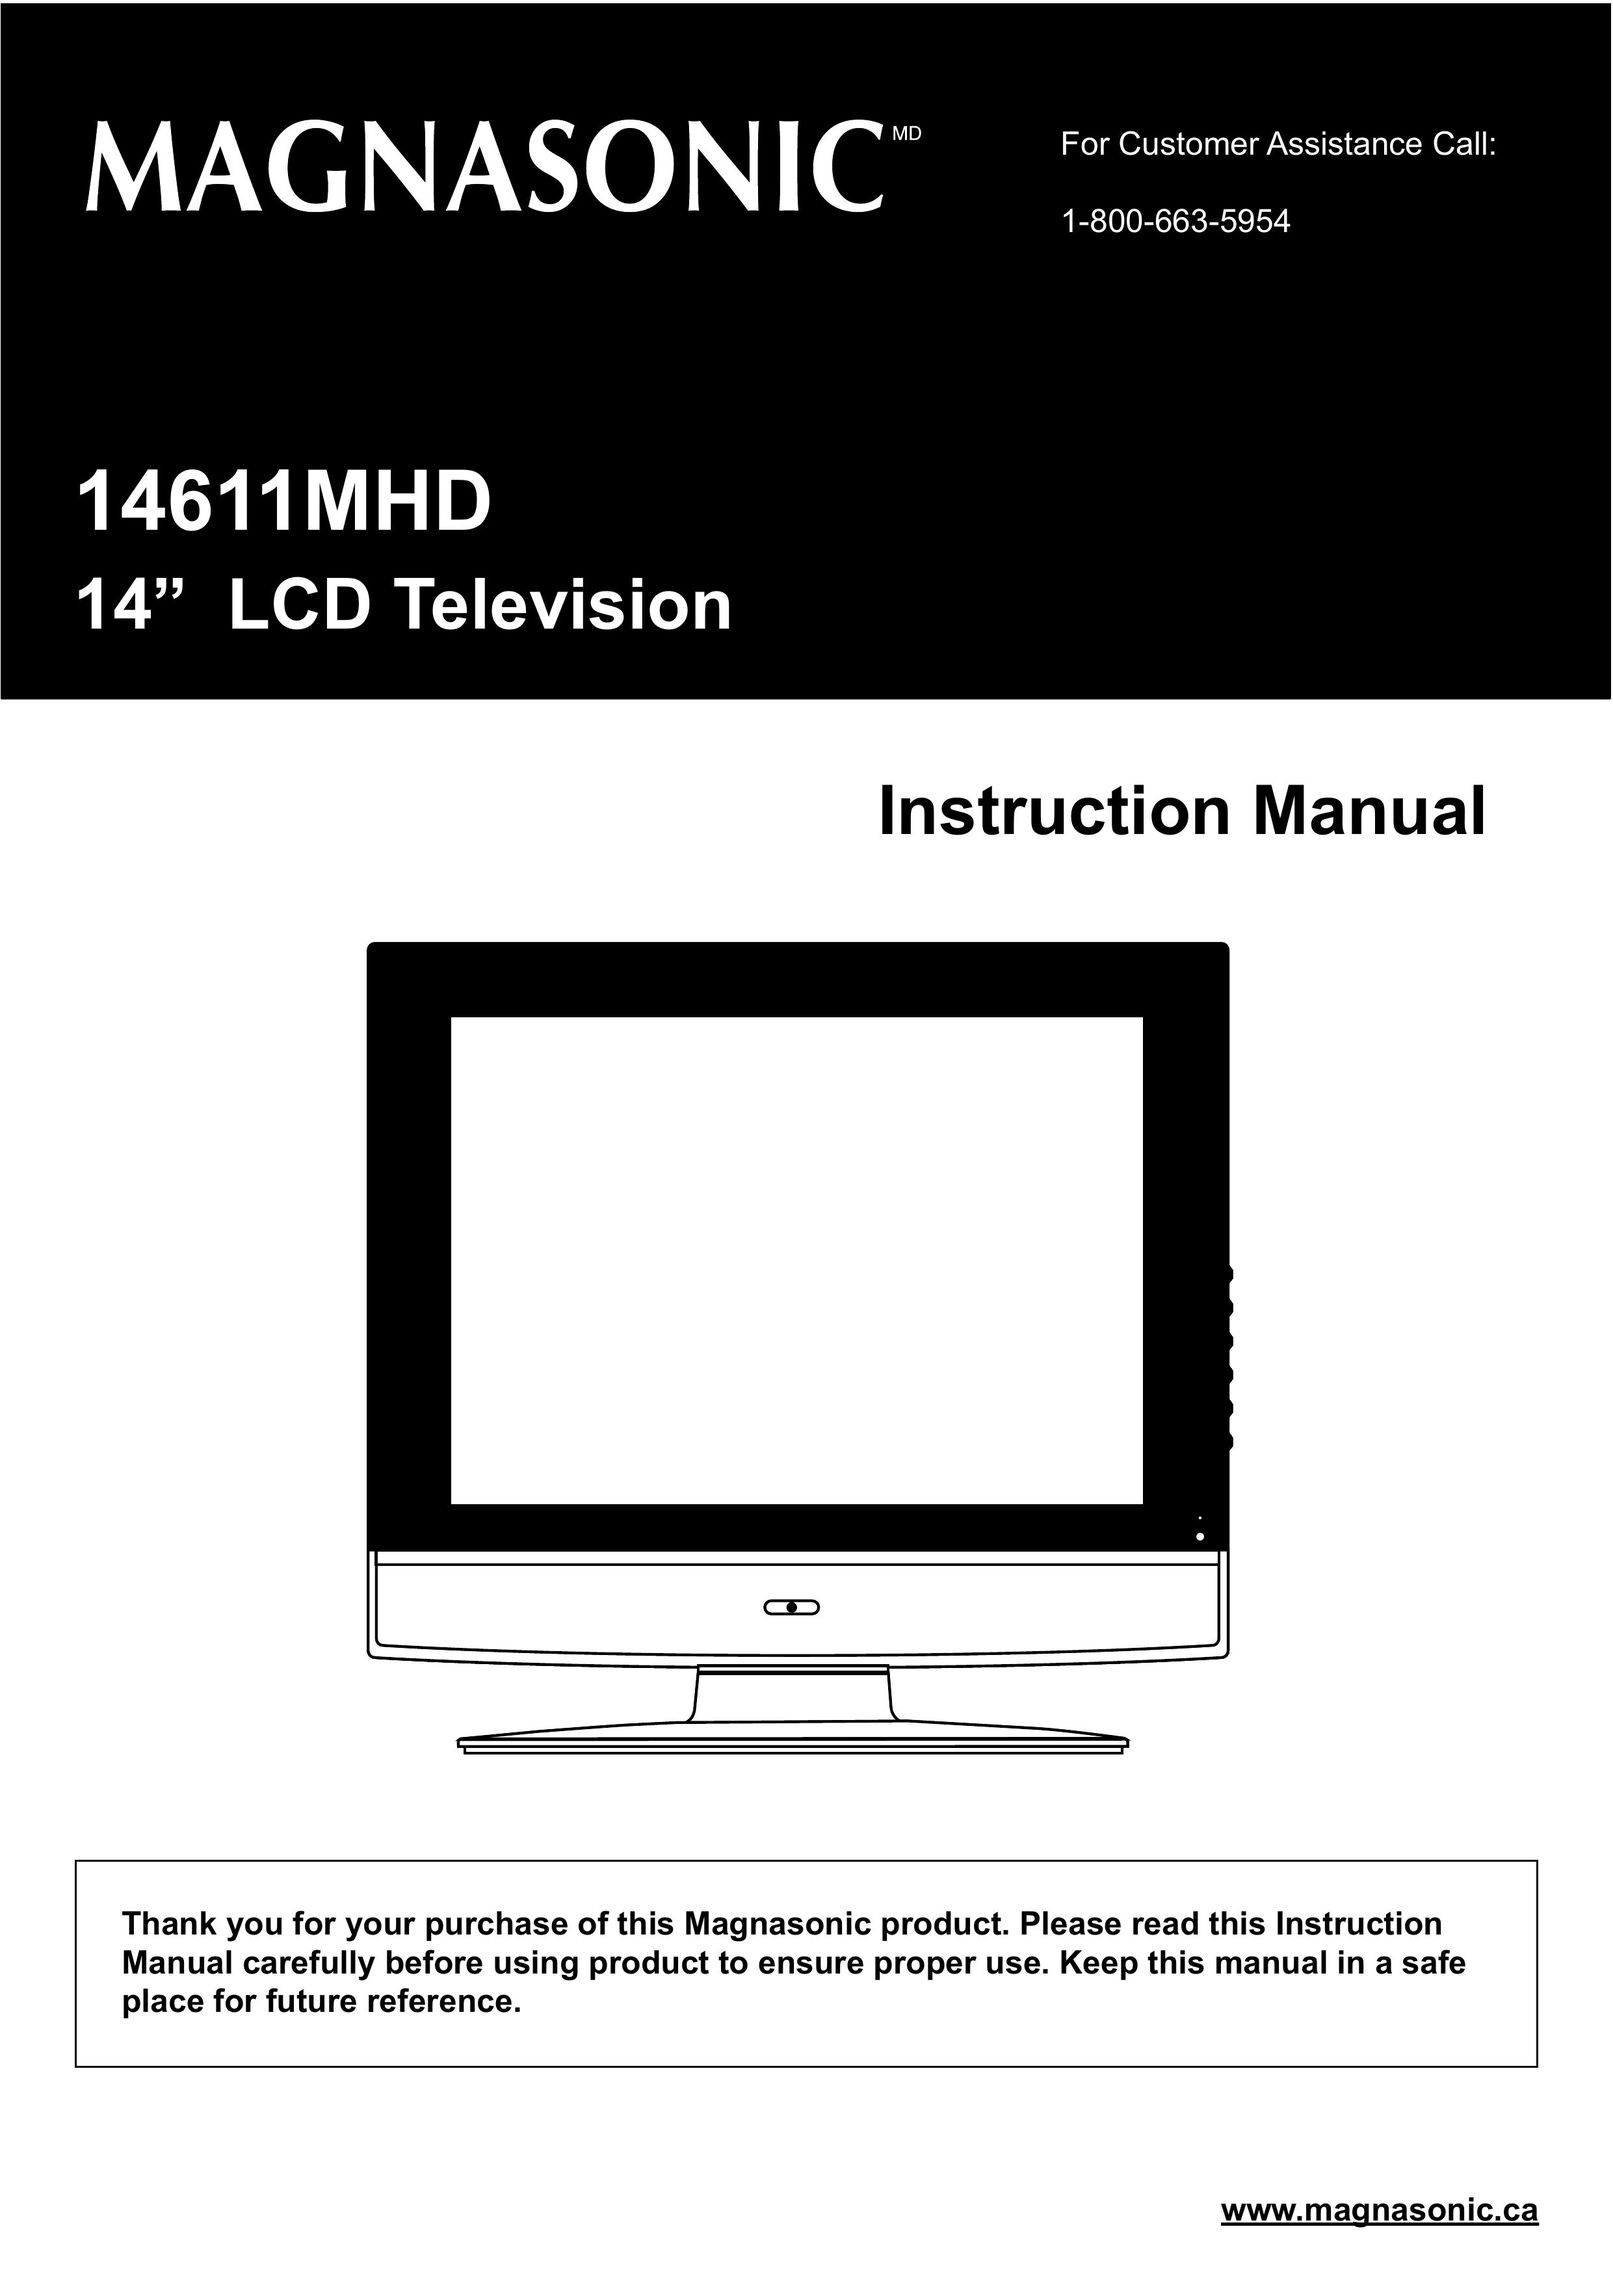 Magnasonic 14611MHD Flat Panel Television User Manual